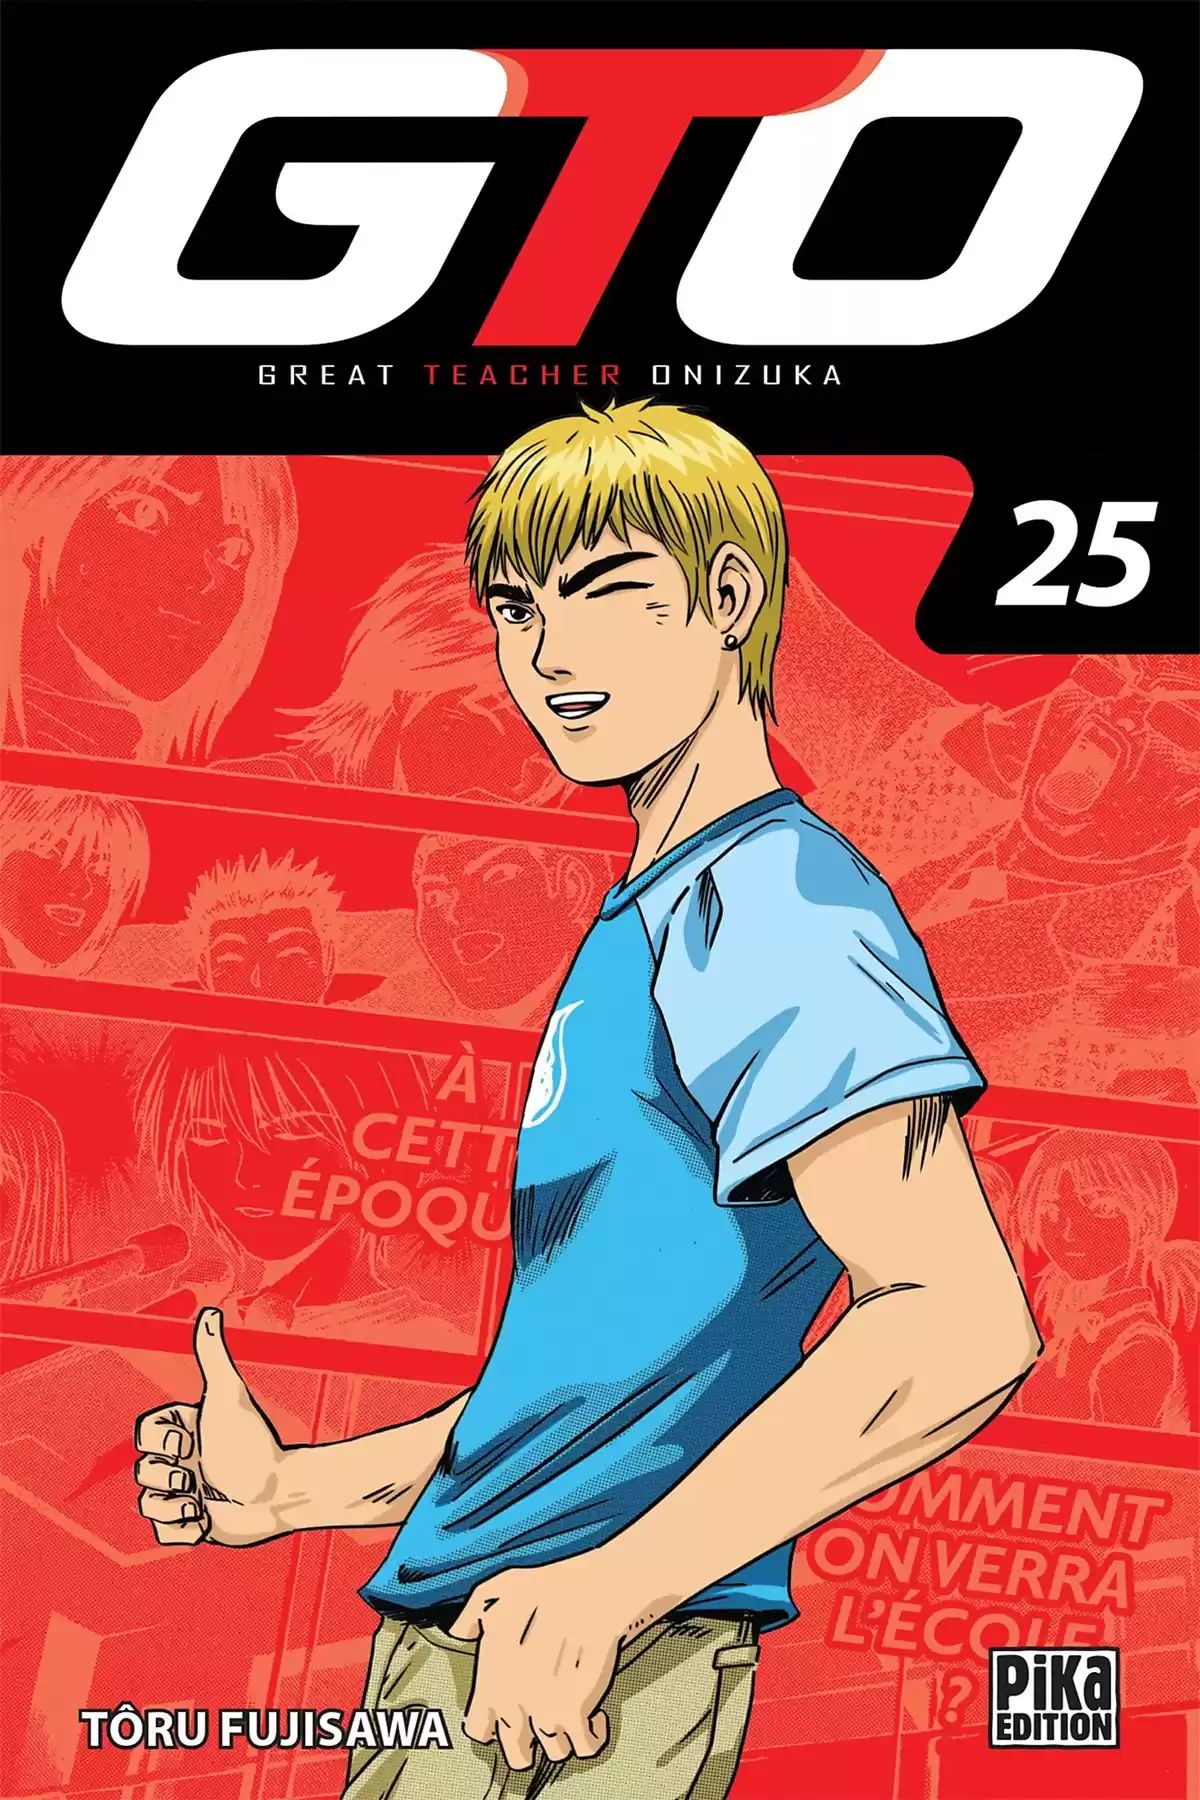 Great Teacher Onizuka Volume 25 page 1